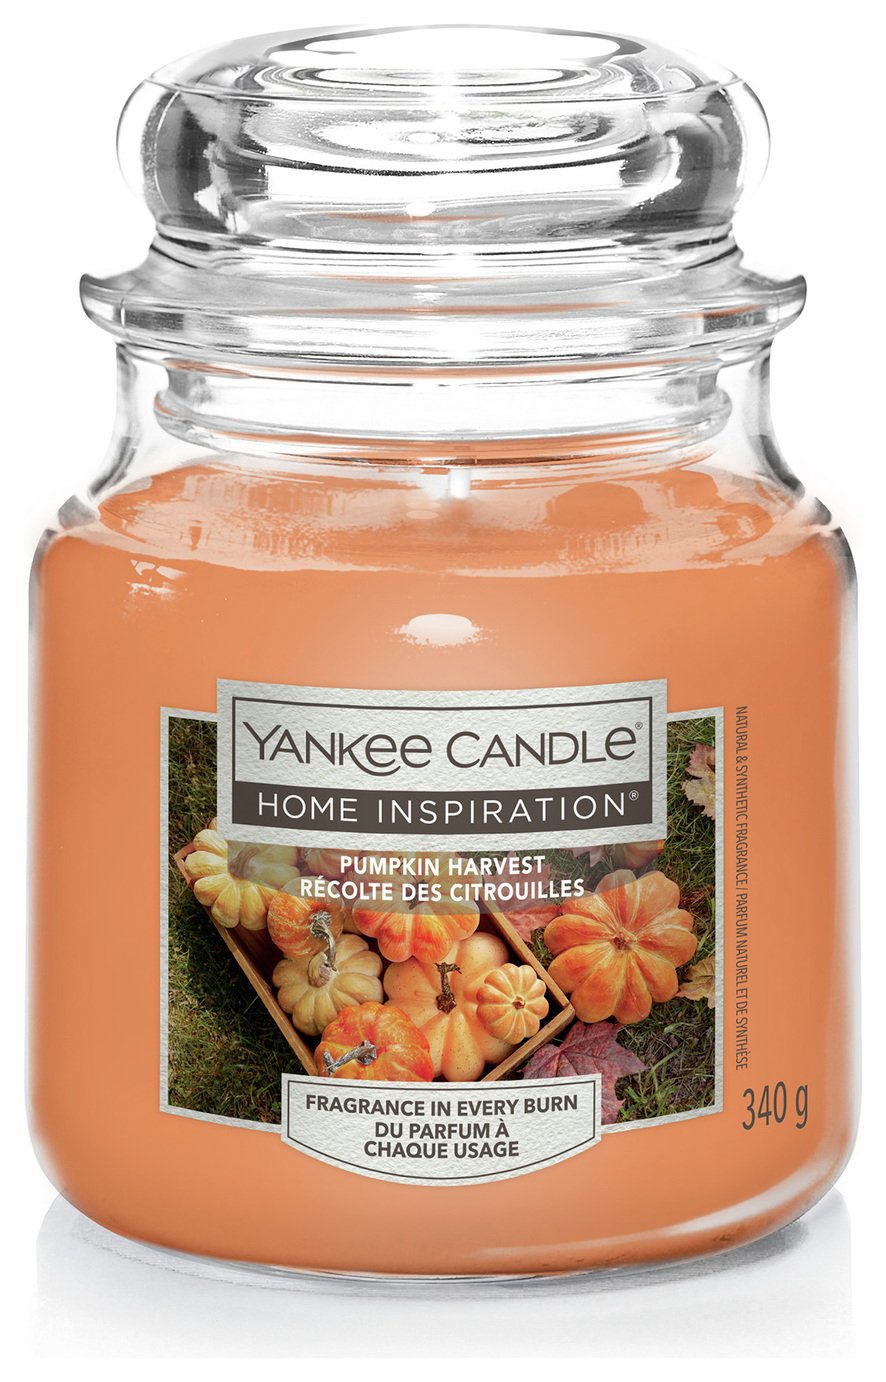 Yankee Hone Inspiration Medium Jar Candle - Pumpkin Harvest